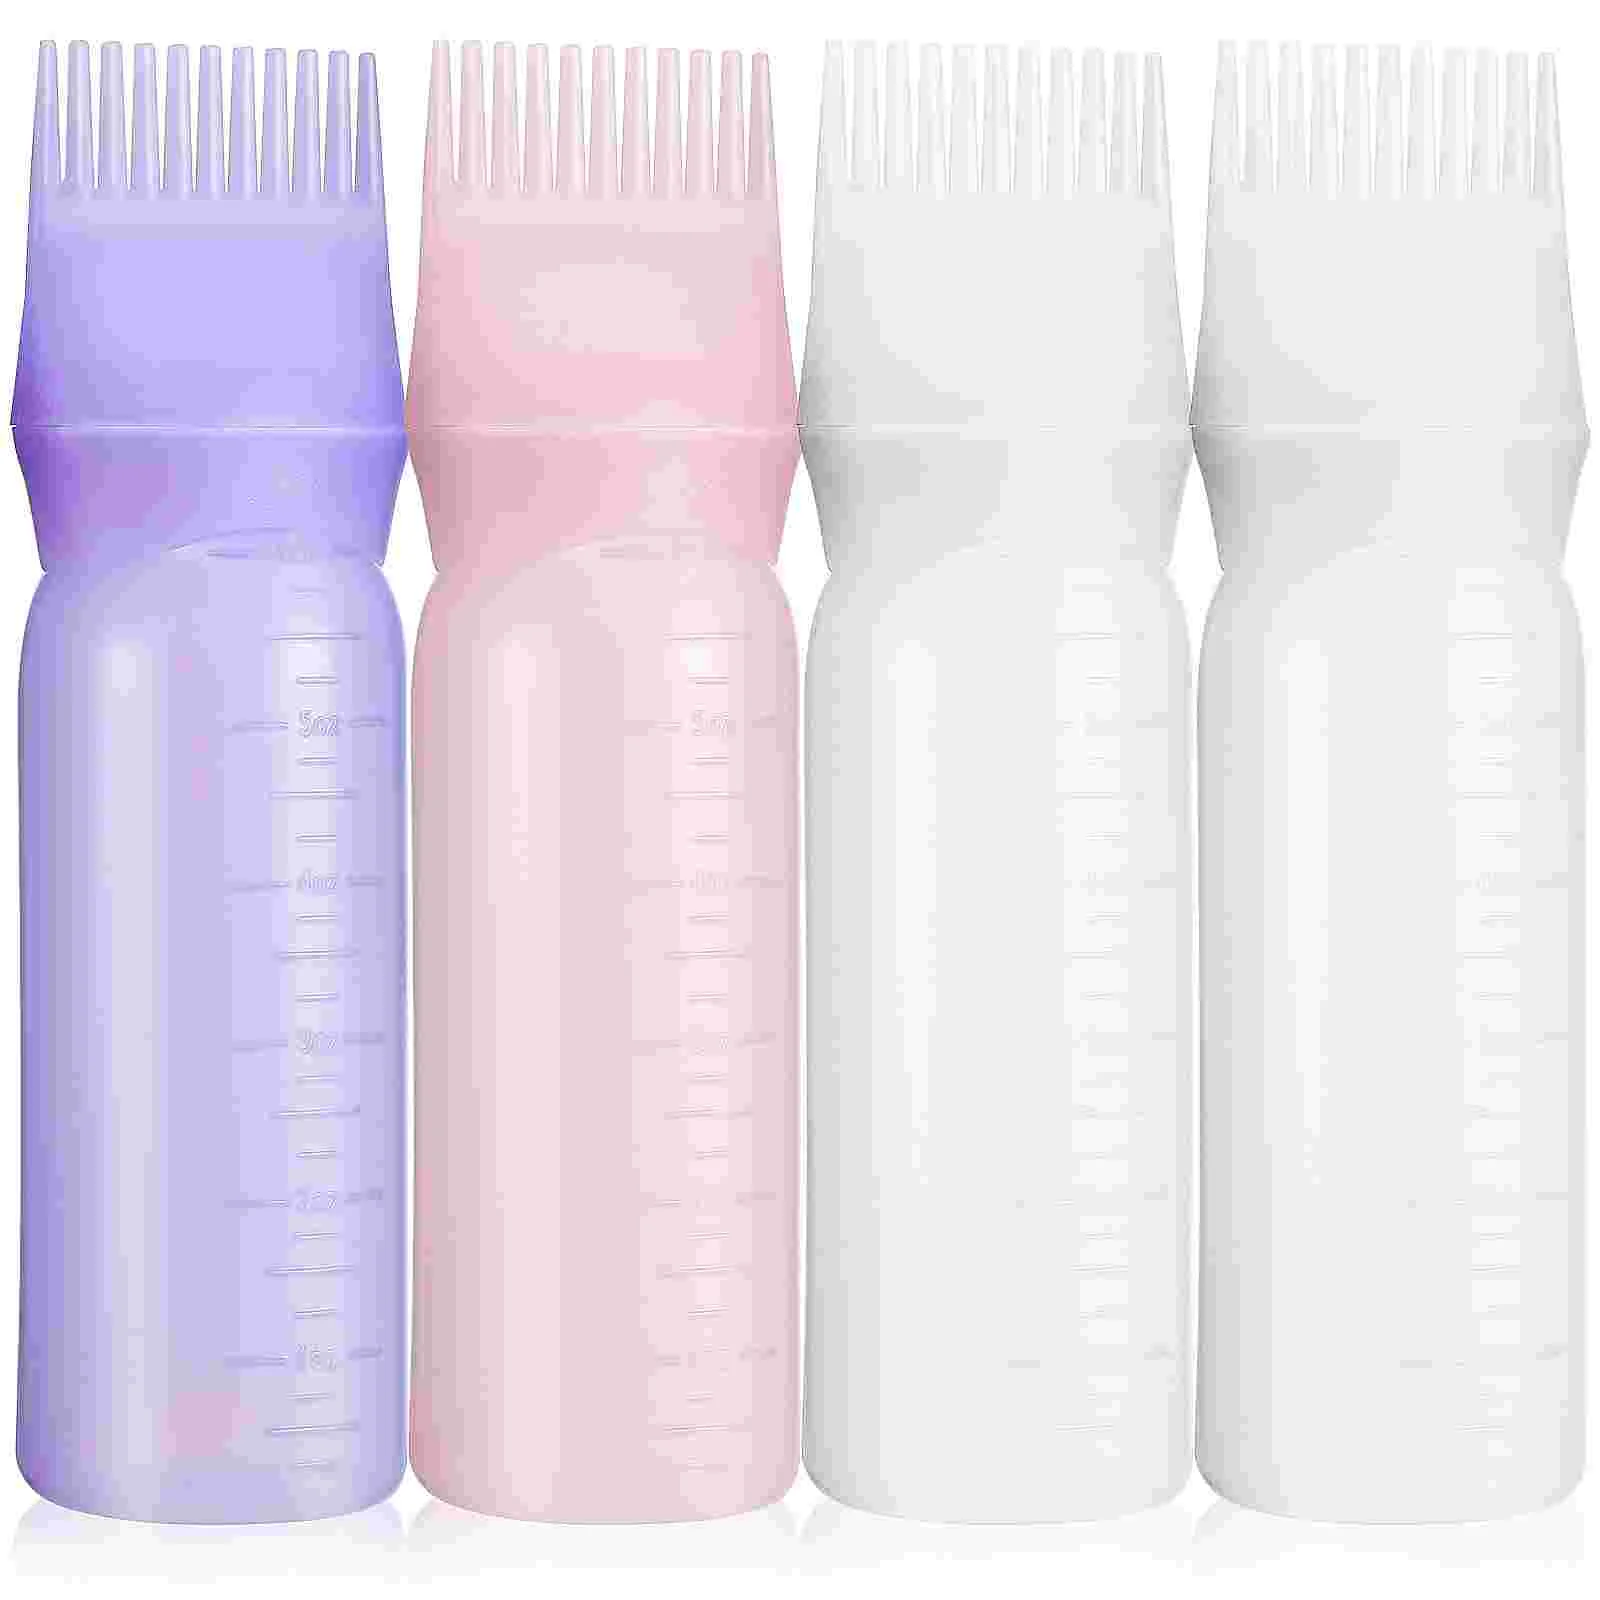 

4 Pcs Hair Oil Bottle Root Comb Bleach Dye Color Applicator Salon Bottles Silica Gel Kit